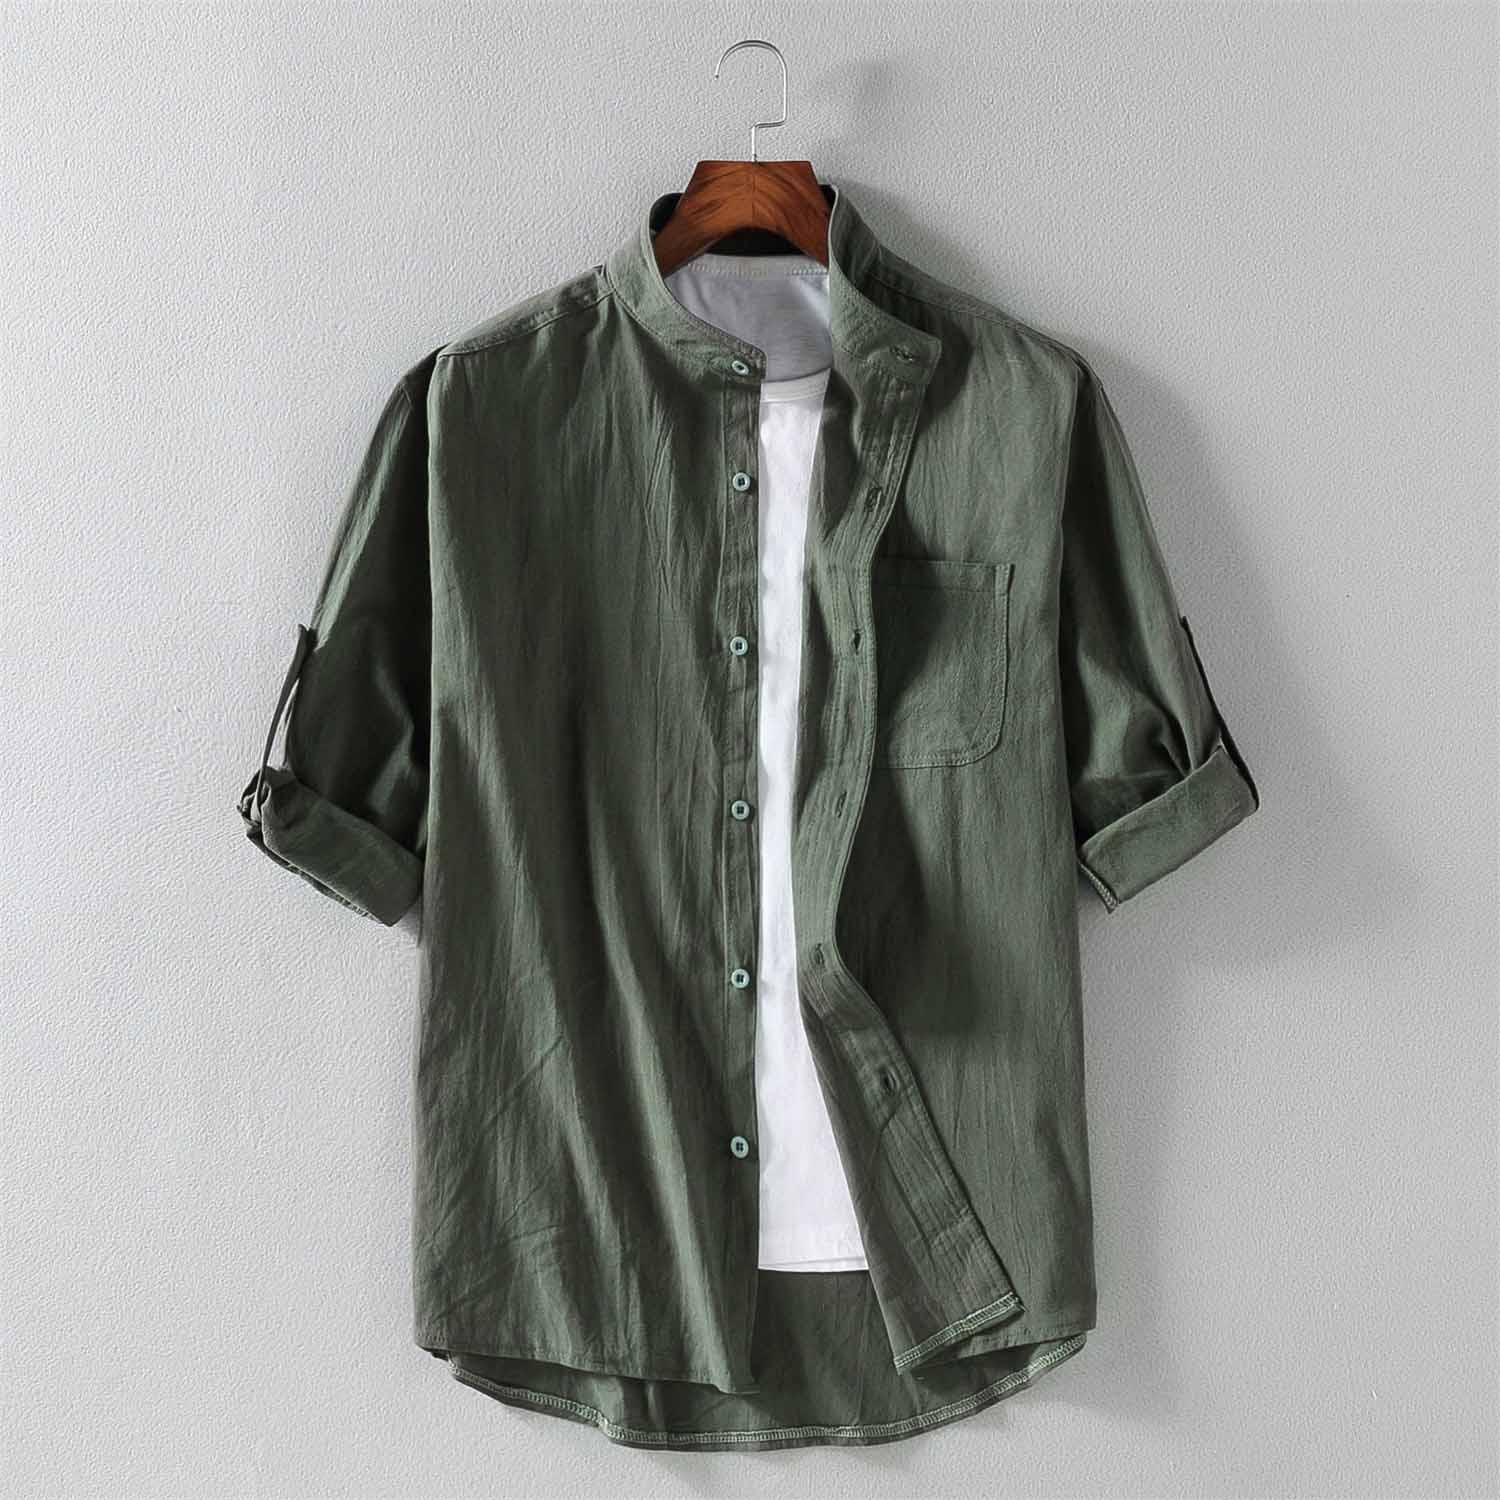 Percy - Summer Loose Thin Cotton Short-Sleeve Shirt - DarkAcademic